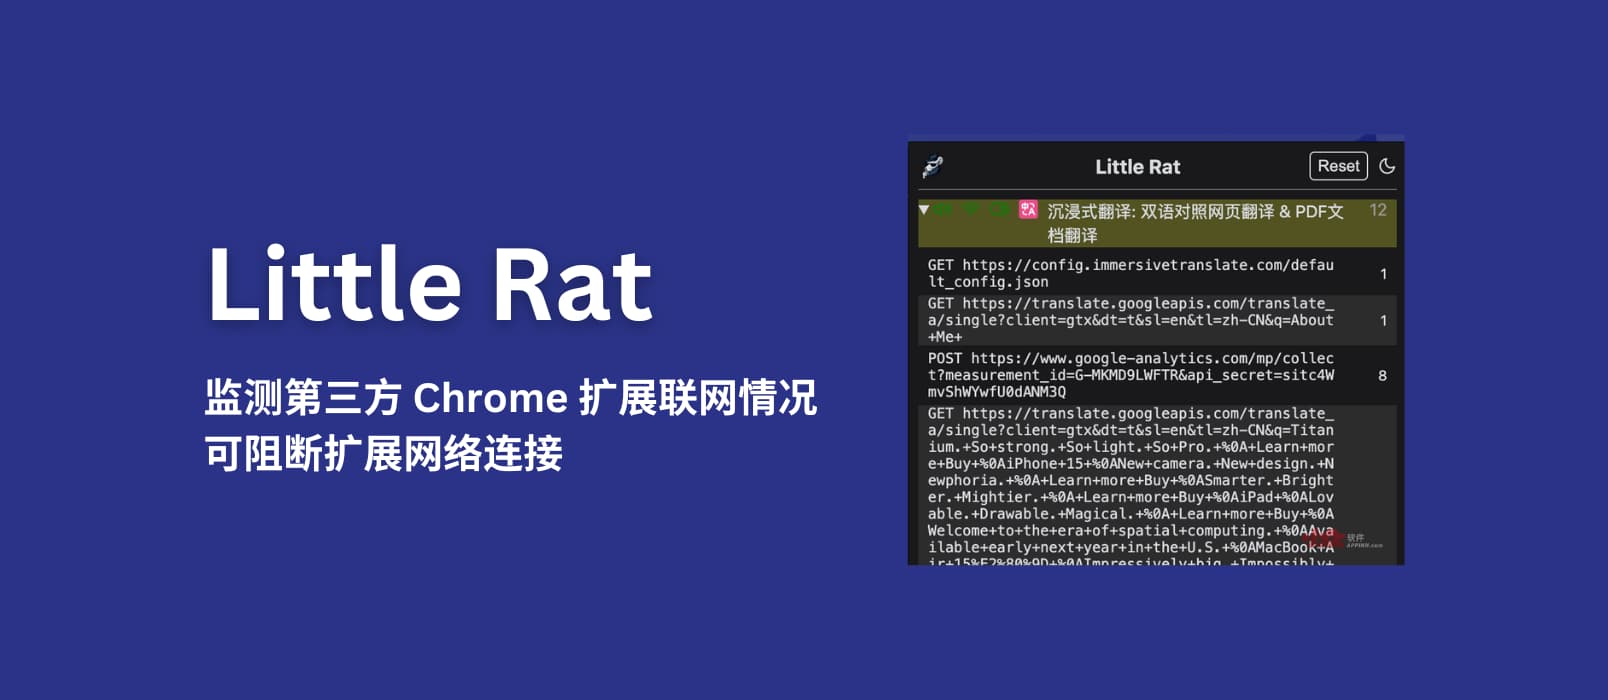 Little Rat – 监测第三方 Chrome 扩展联网情况，可阻断扩展网络连接